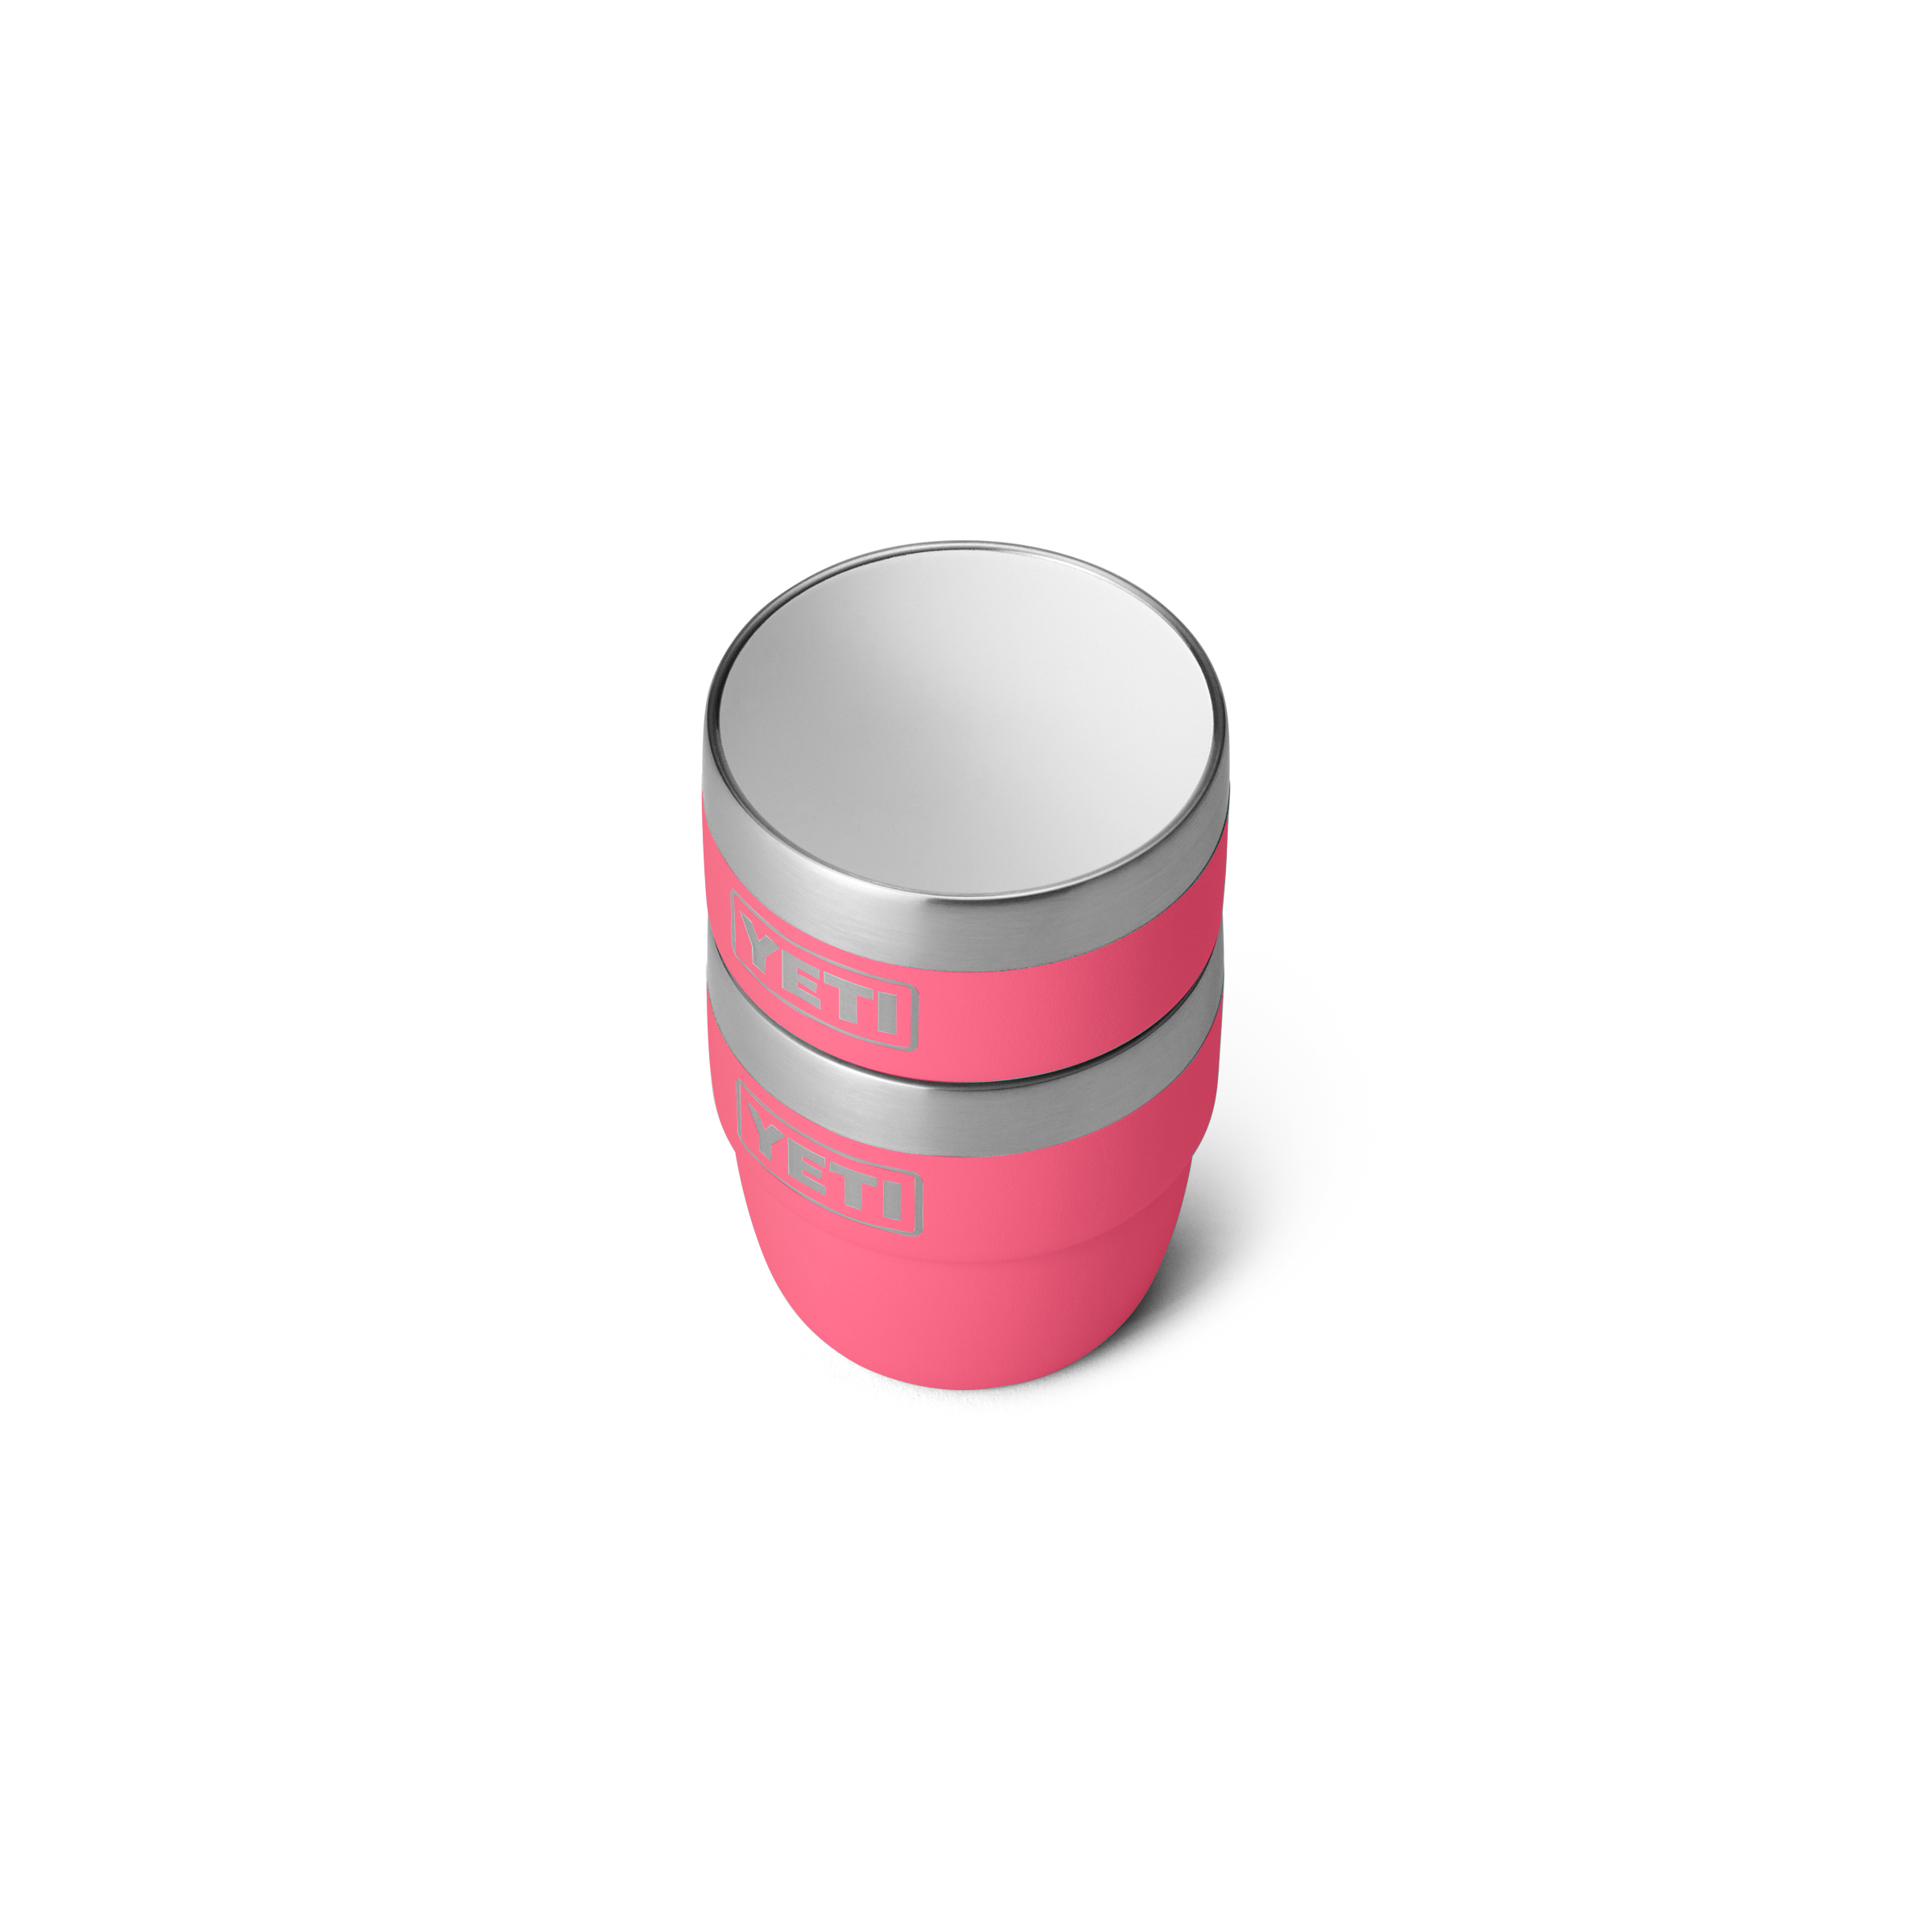 YETI Rambler® 4 oz (118 ml) Stackable Cups Tropical Pink